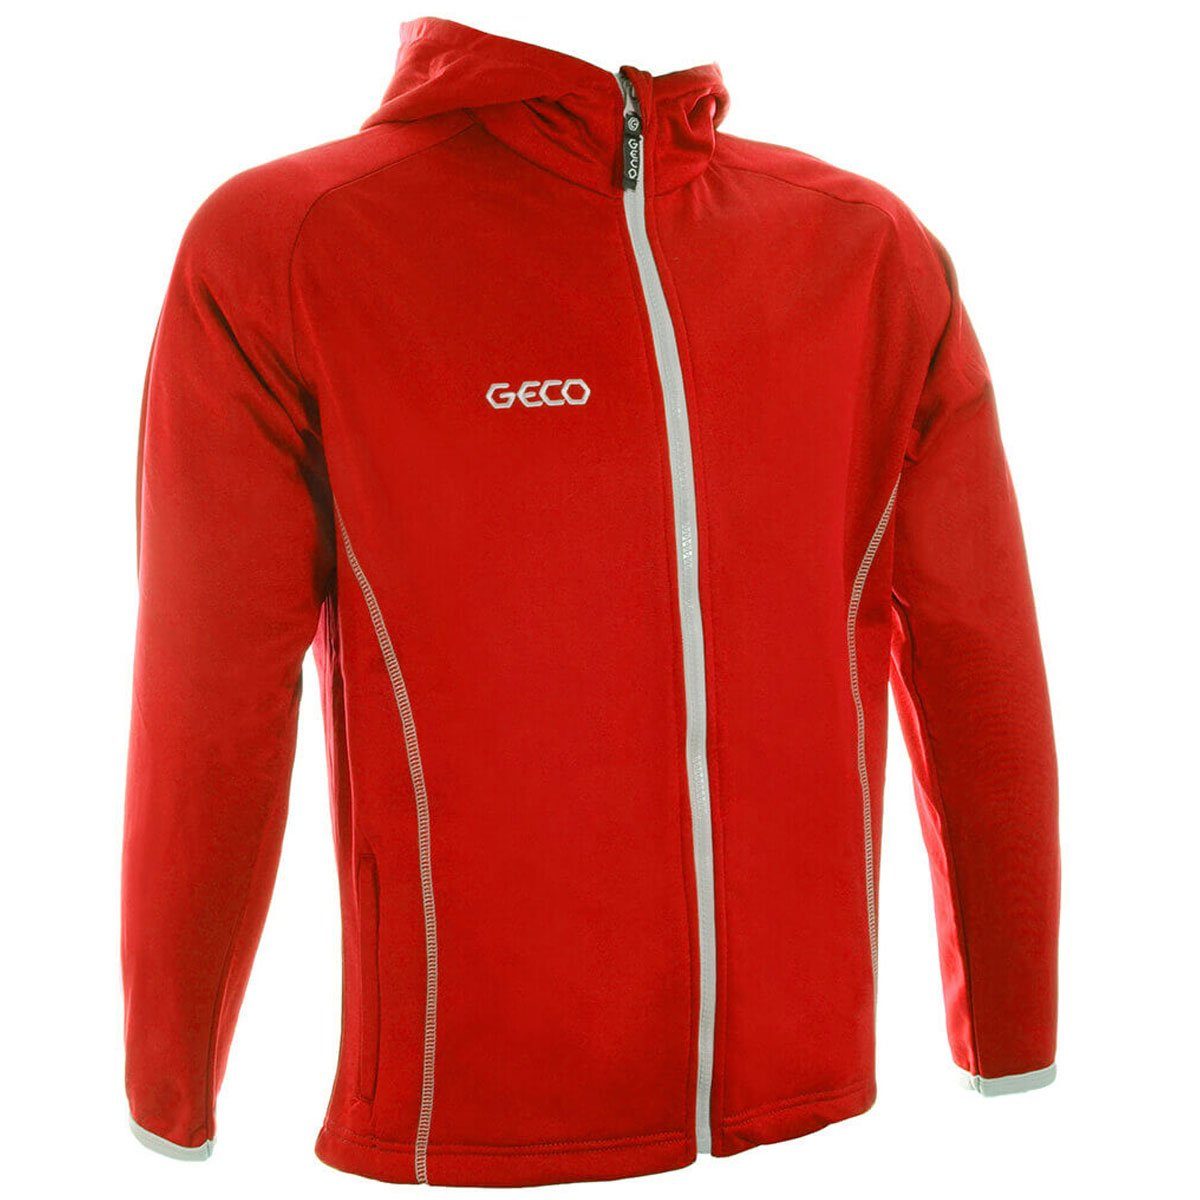 Geco Sportswear Präsentationsjacke Kapuze Fußball Trainingsjacke Trainingsjacke Hurrican rot Geco mit